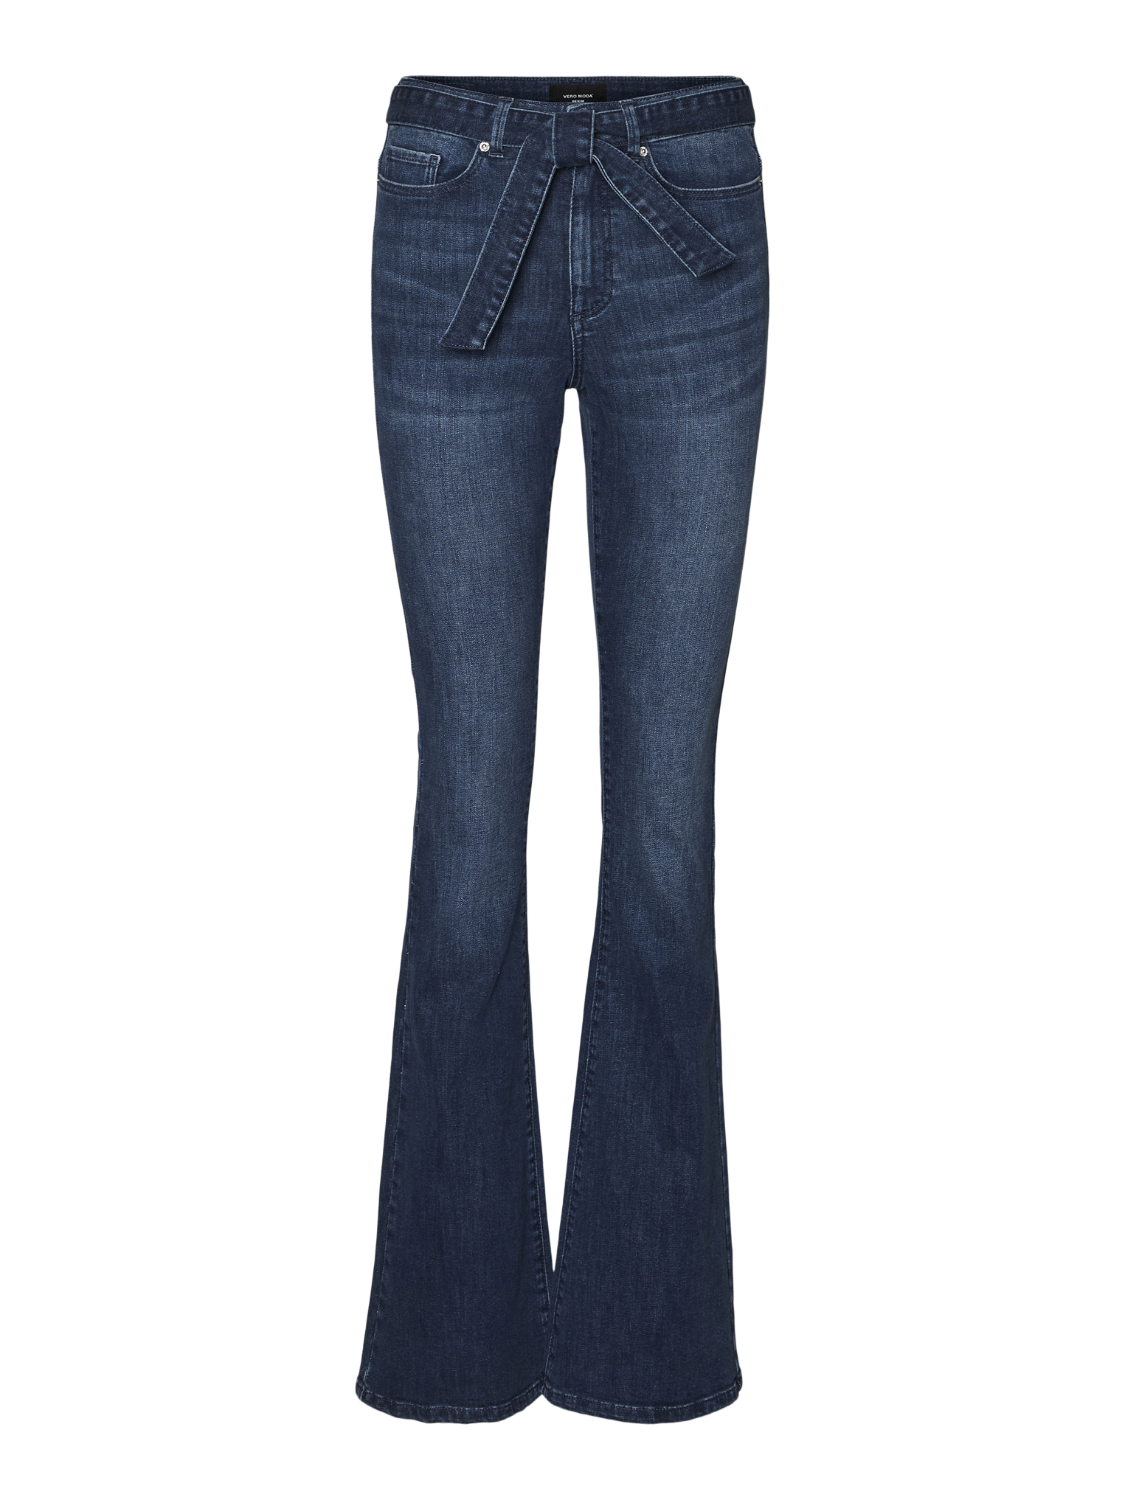 VMSIGA Jeans - Medium Blue Denim